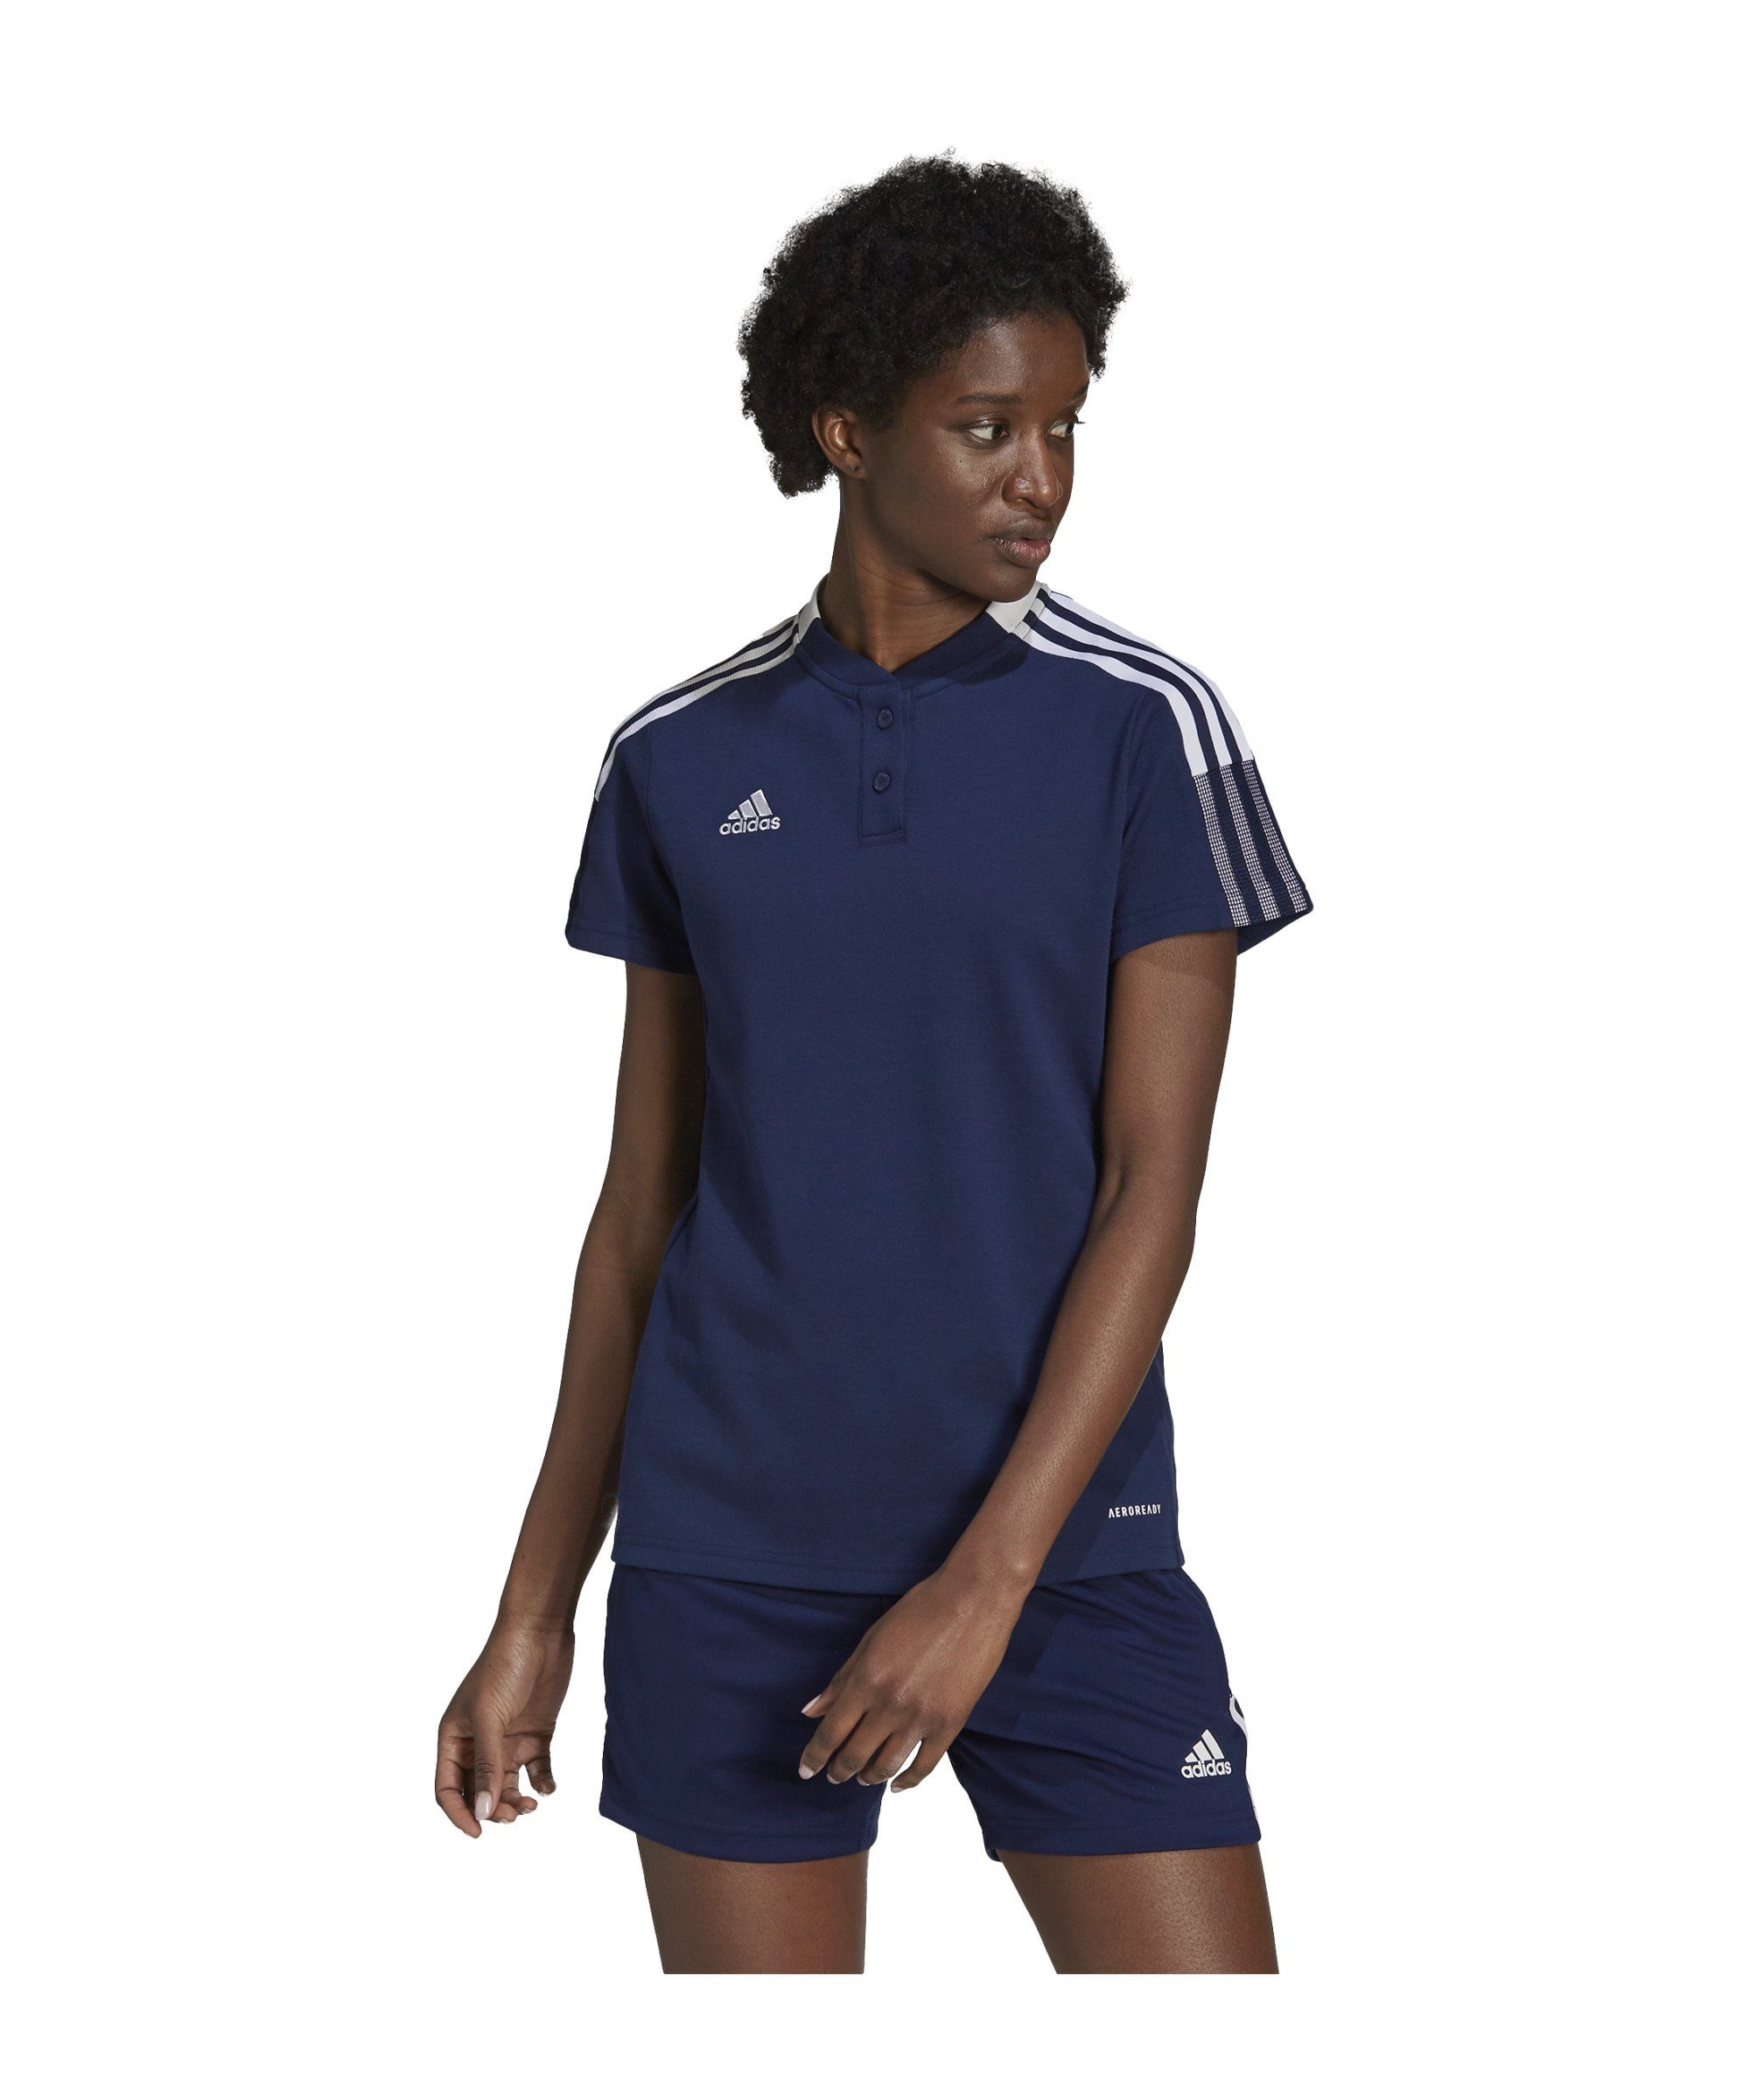 COACH 21 Poloshirt Performance Nachhaltiges Tiro adidas Poloshirt Damen blau Produkt